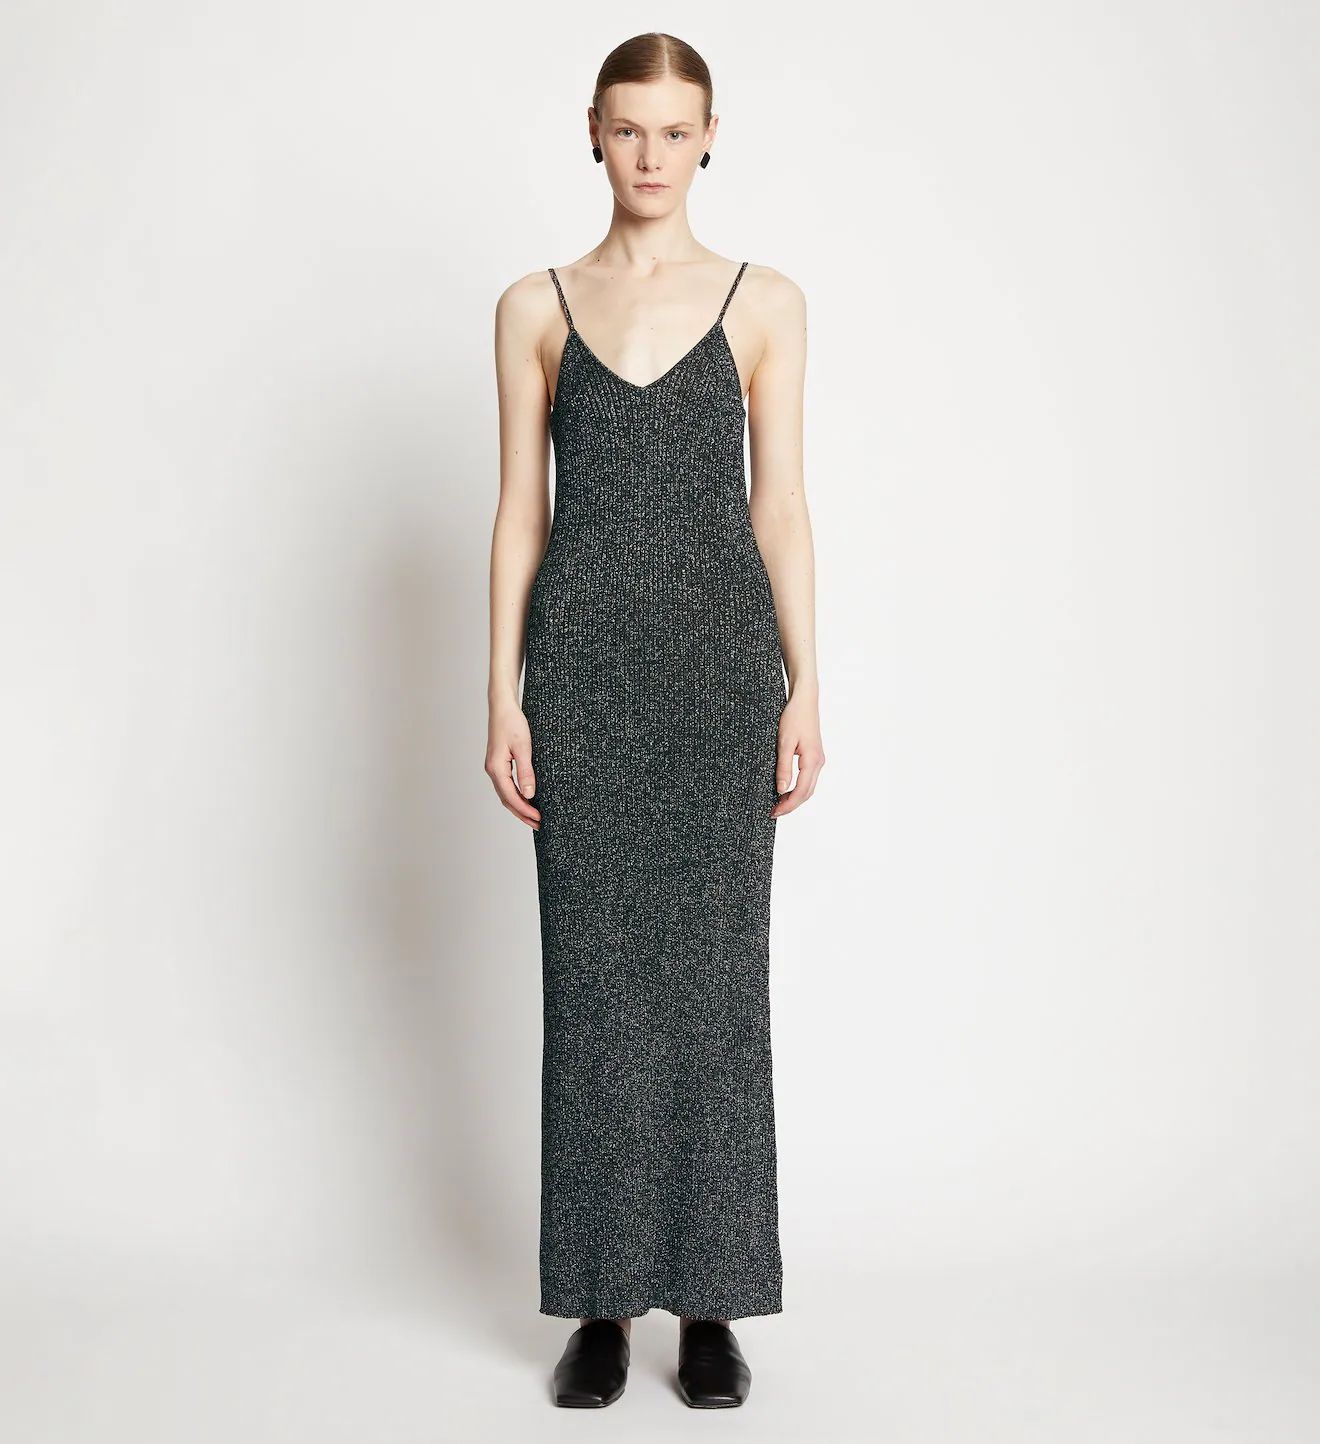 Lurex Maxi Dress in black/silver | Proenza Schouler | Proenza Schouler LLC